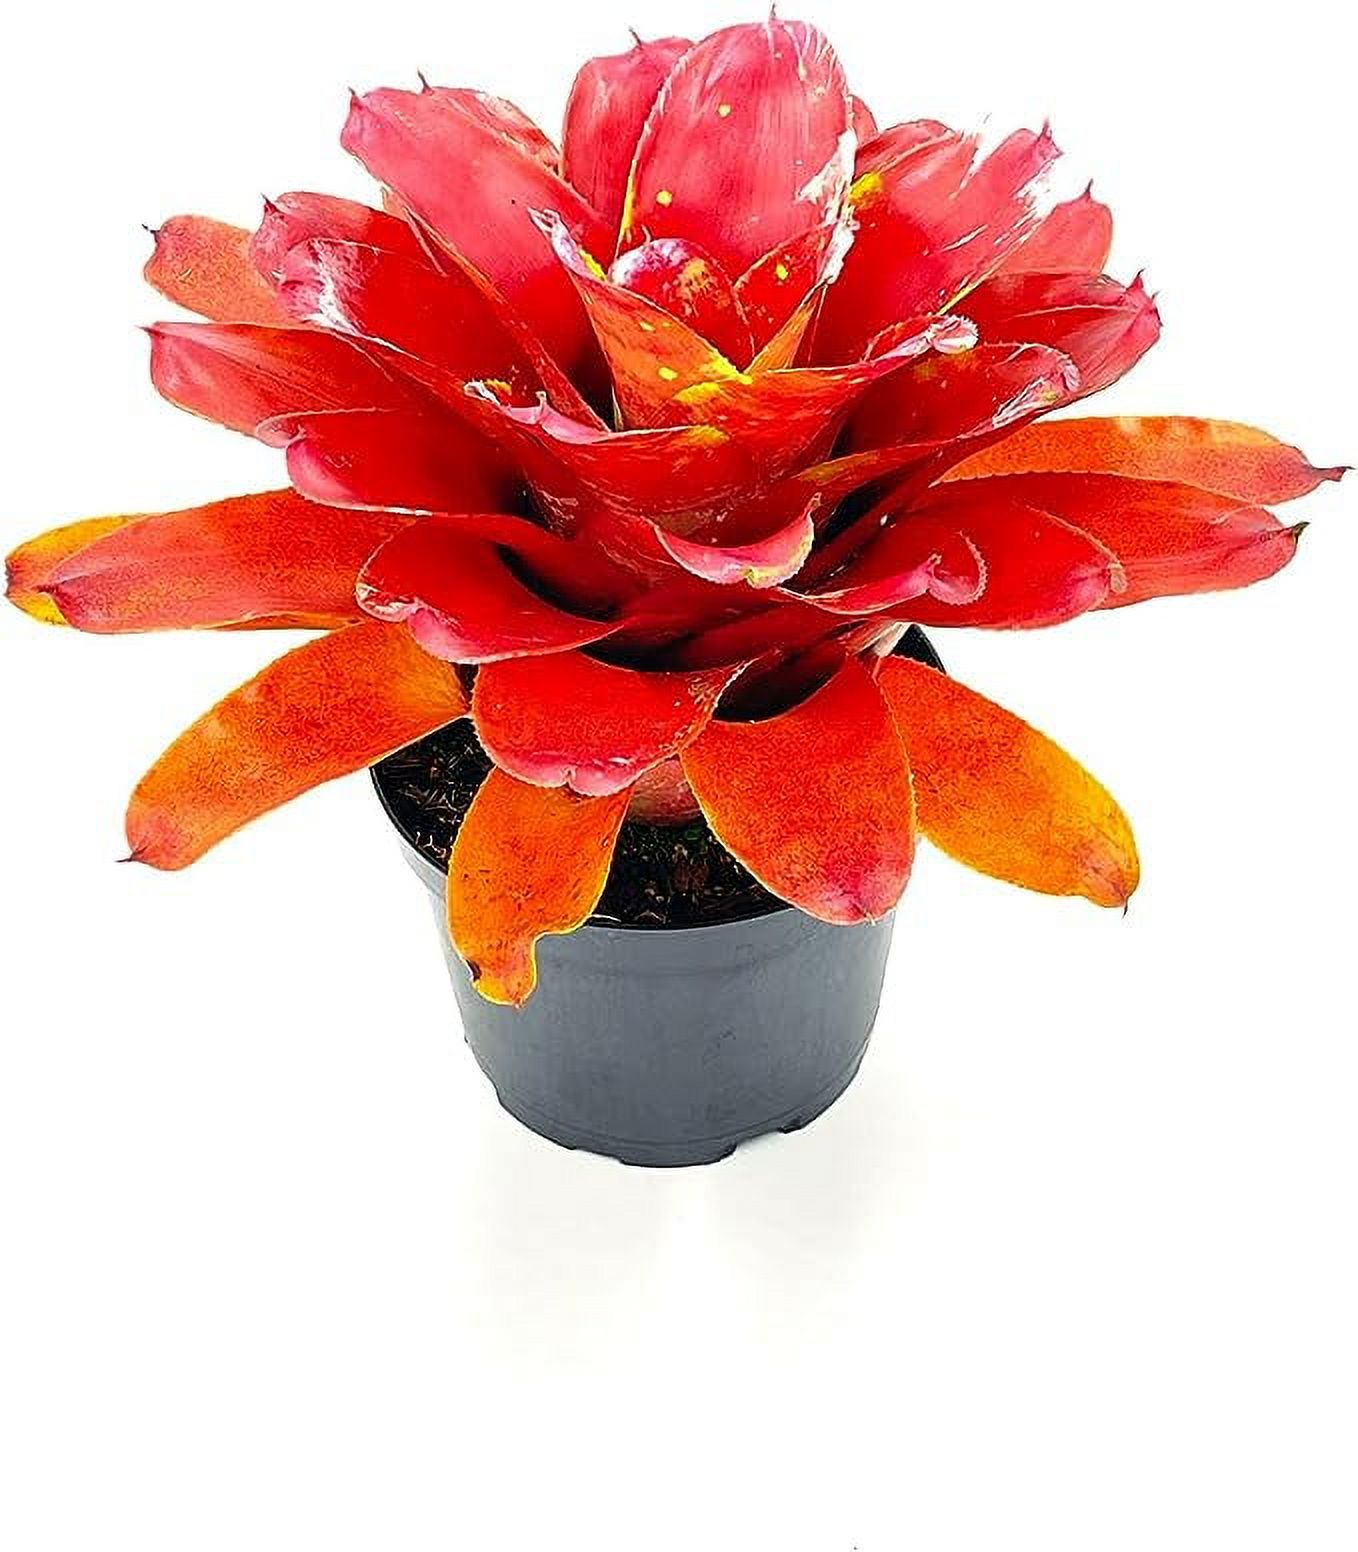 ragnaroc Live Plants – Bromeliad Neoregelia Lamberts Pride, 8-12" in 6" Pot - 1ct - Live Arrival Guaranteed - House Plants for Home Decor & Gift - image 4 of 5